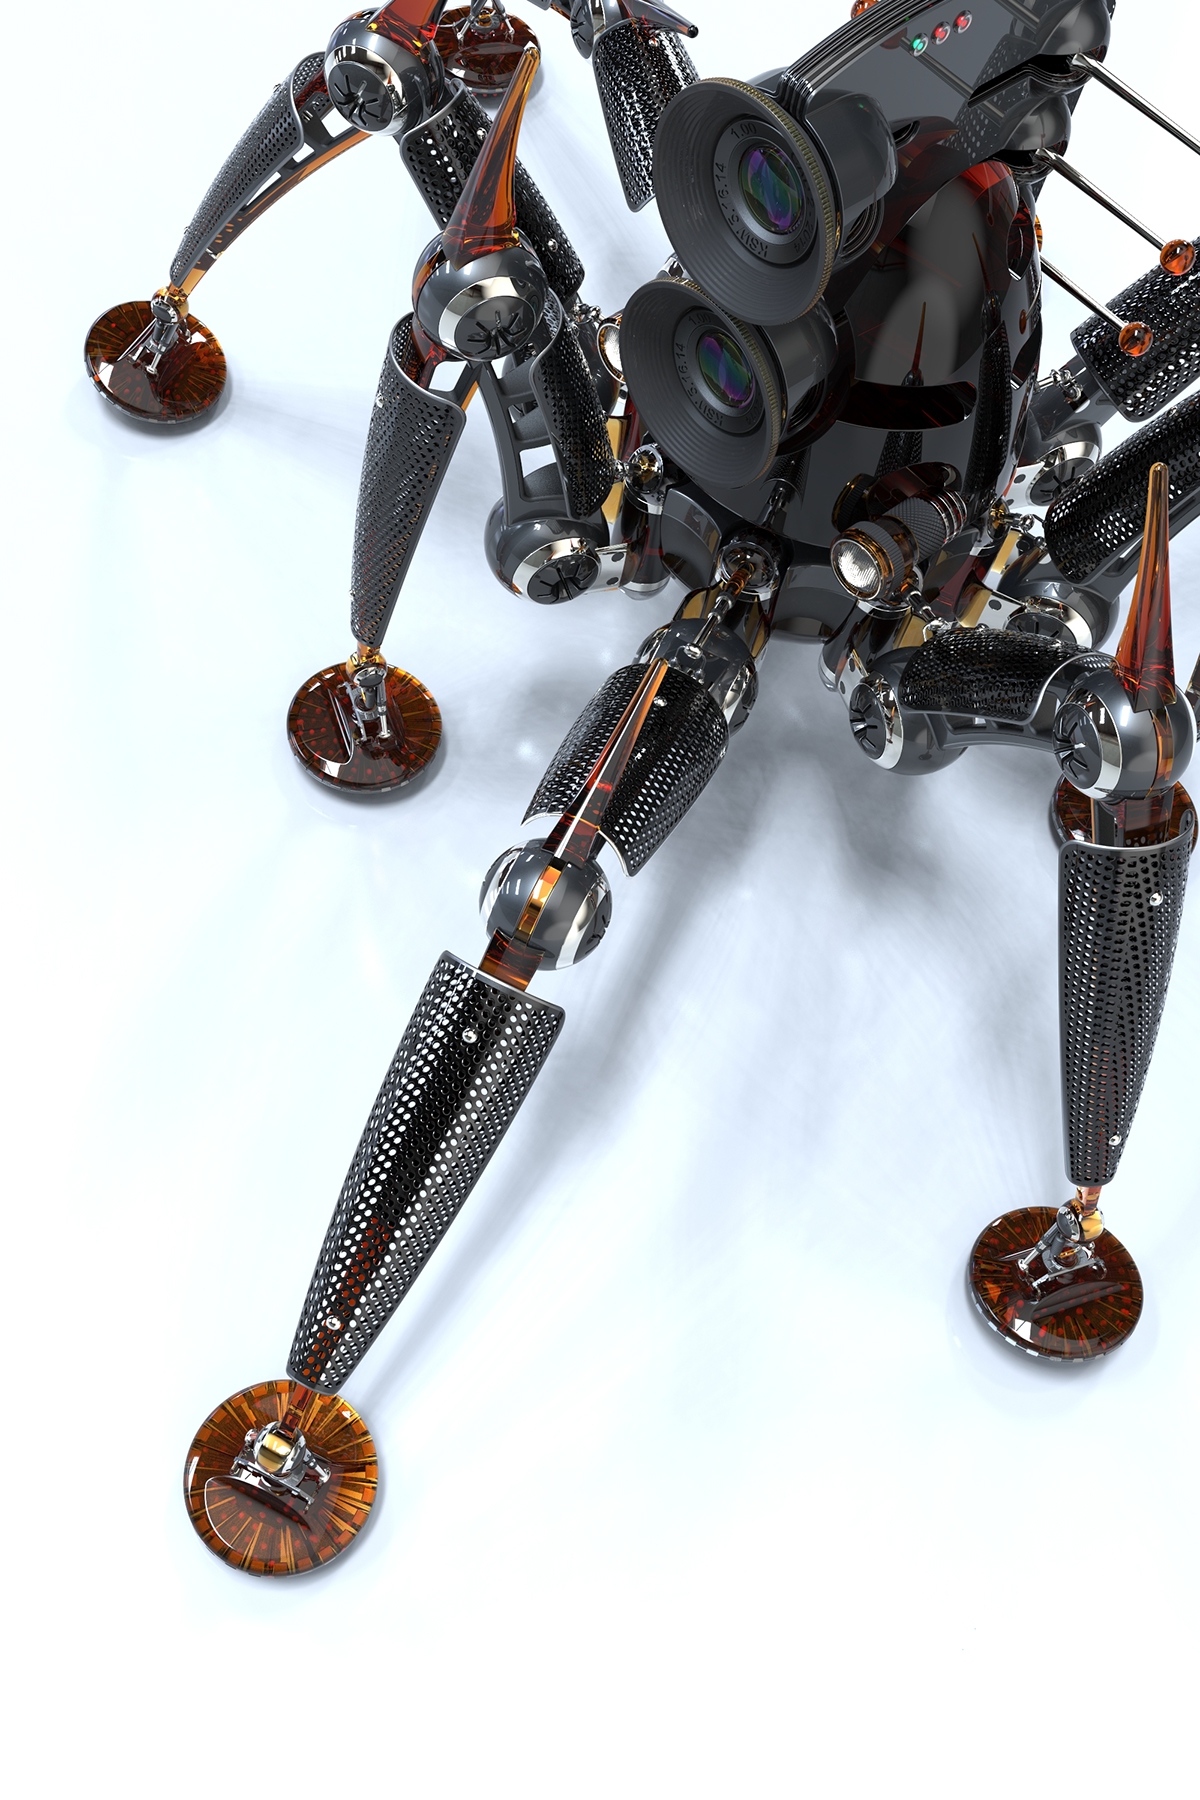 mech mechanical sci-fi spider Crawler robot cameras Row 0 Simon WIlliamson Row Zero